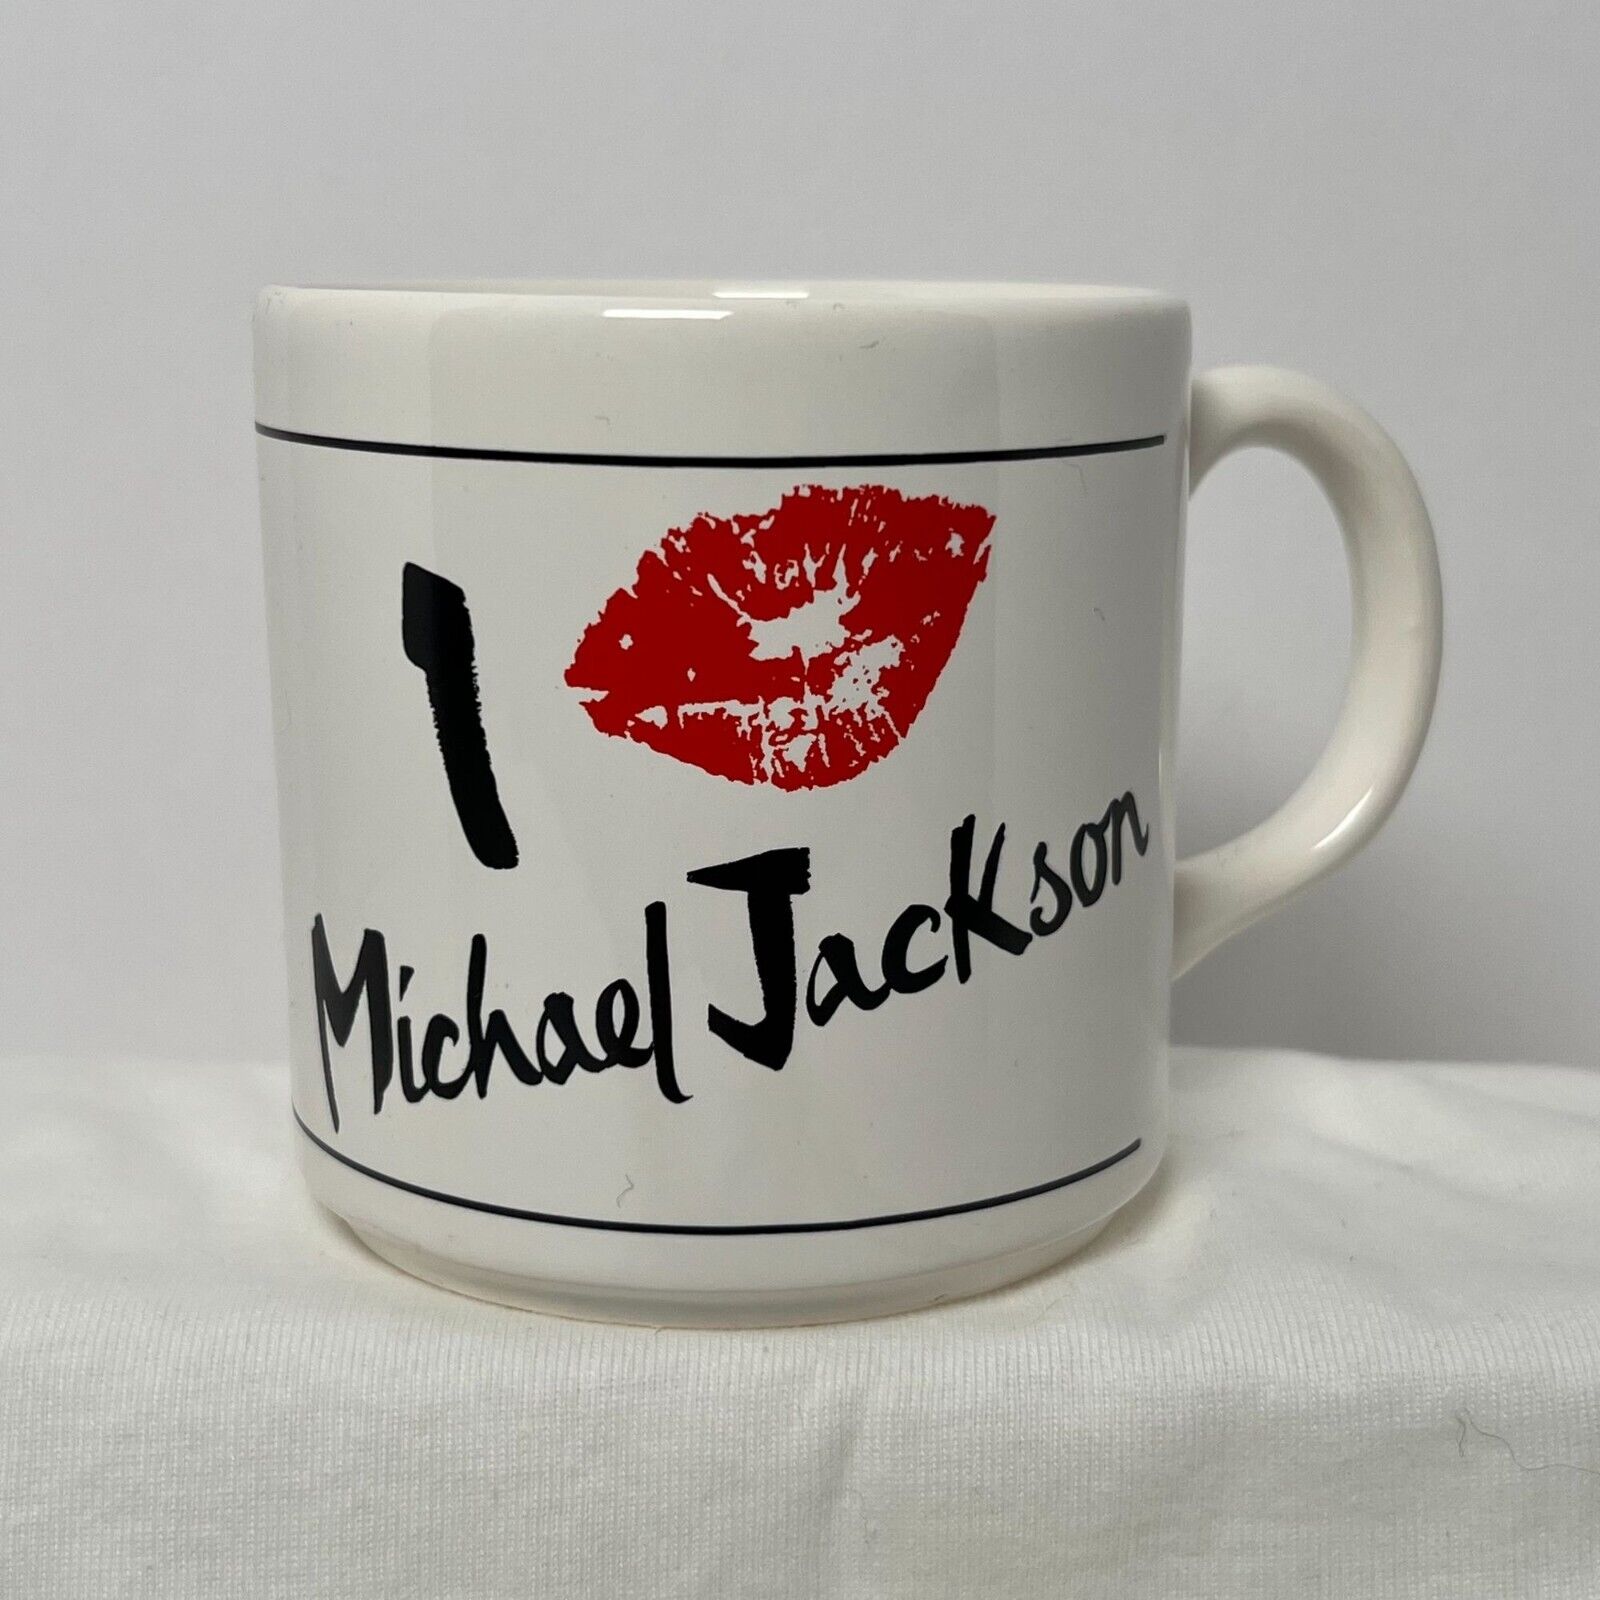 I Love Micheal Jackson White Coffee Mug with Kiss Lips Cup Smooch Made in Brazil